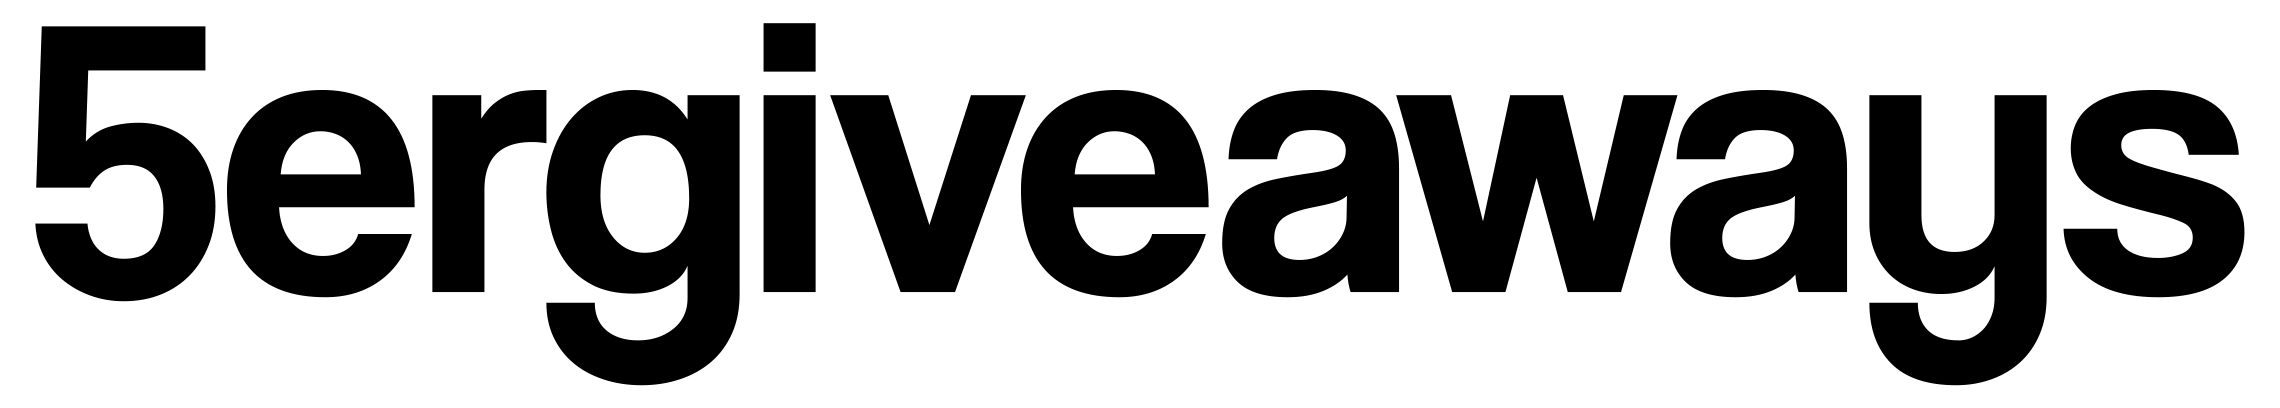 5g Black Logo